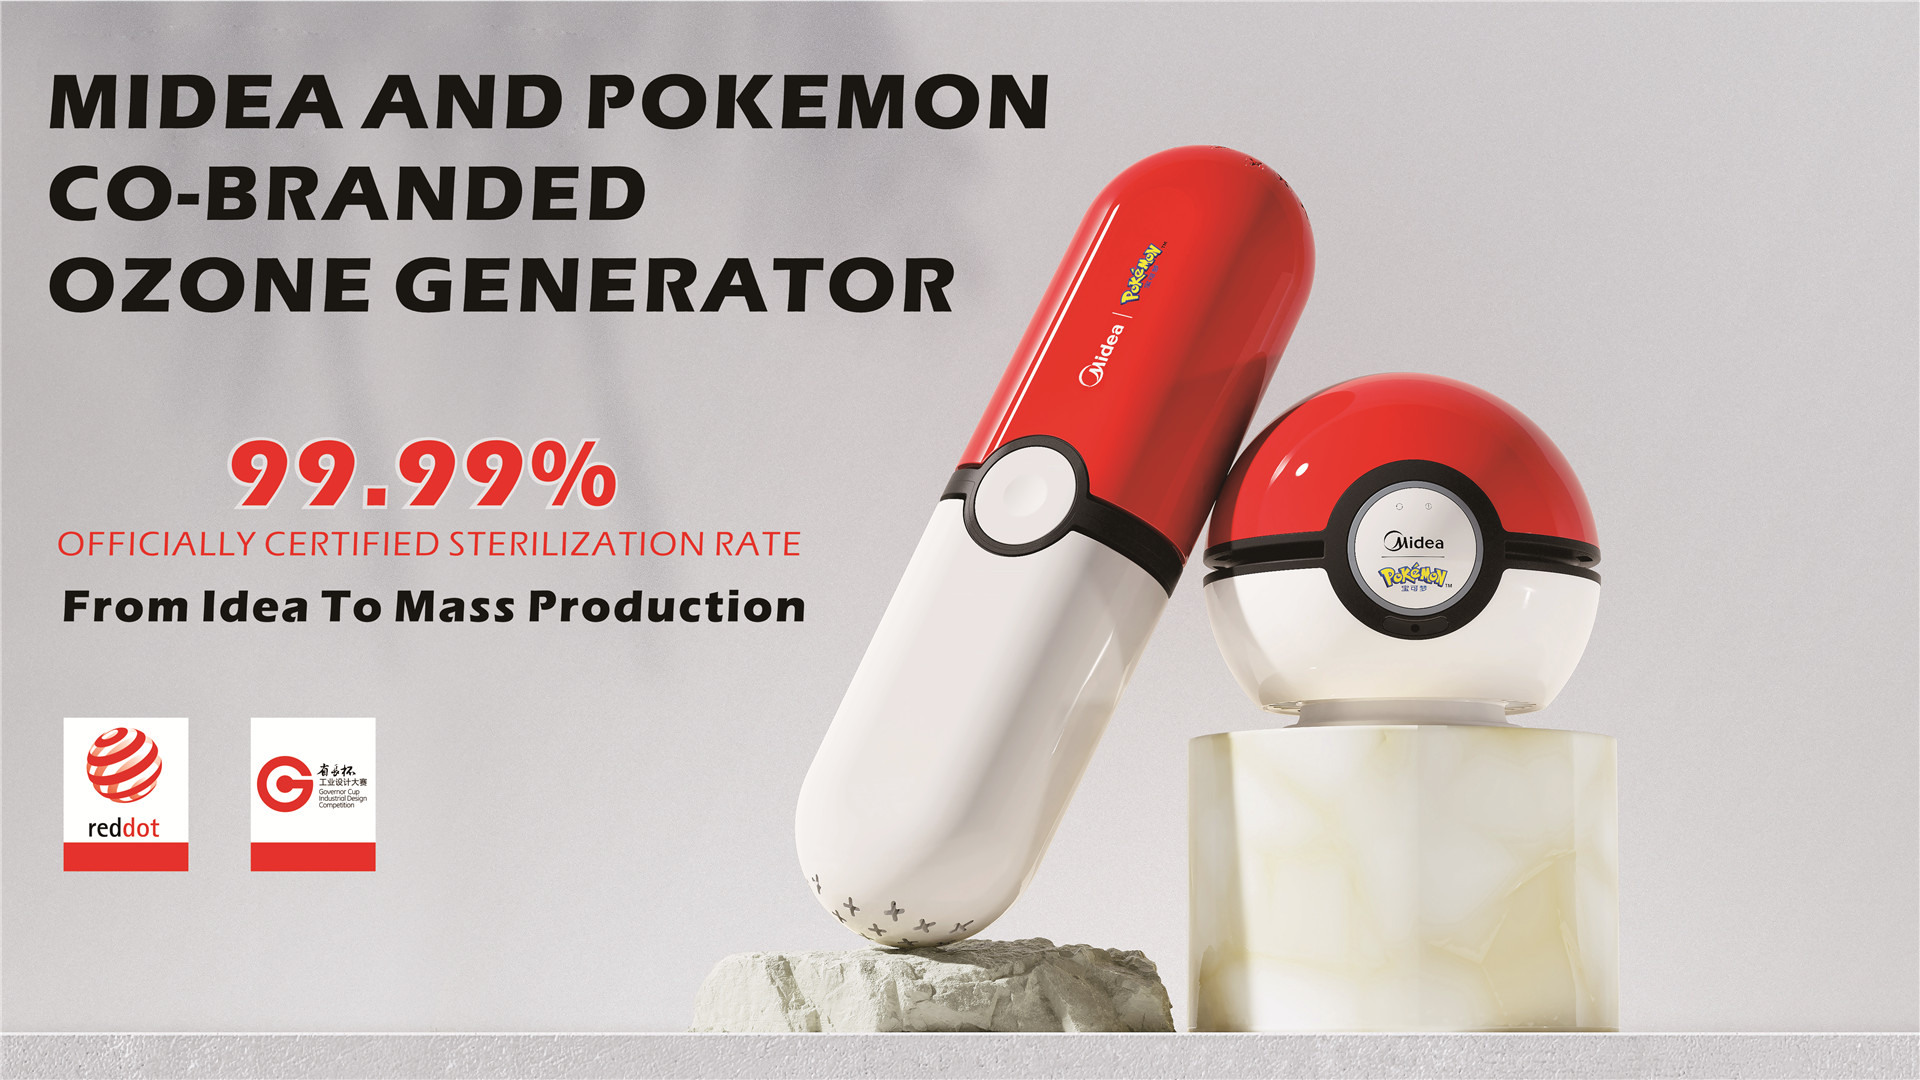 Midea and Pokemon Co-Branded Ozonegenerator